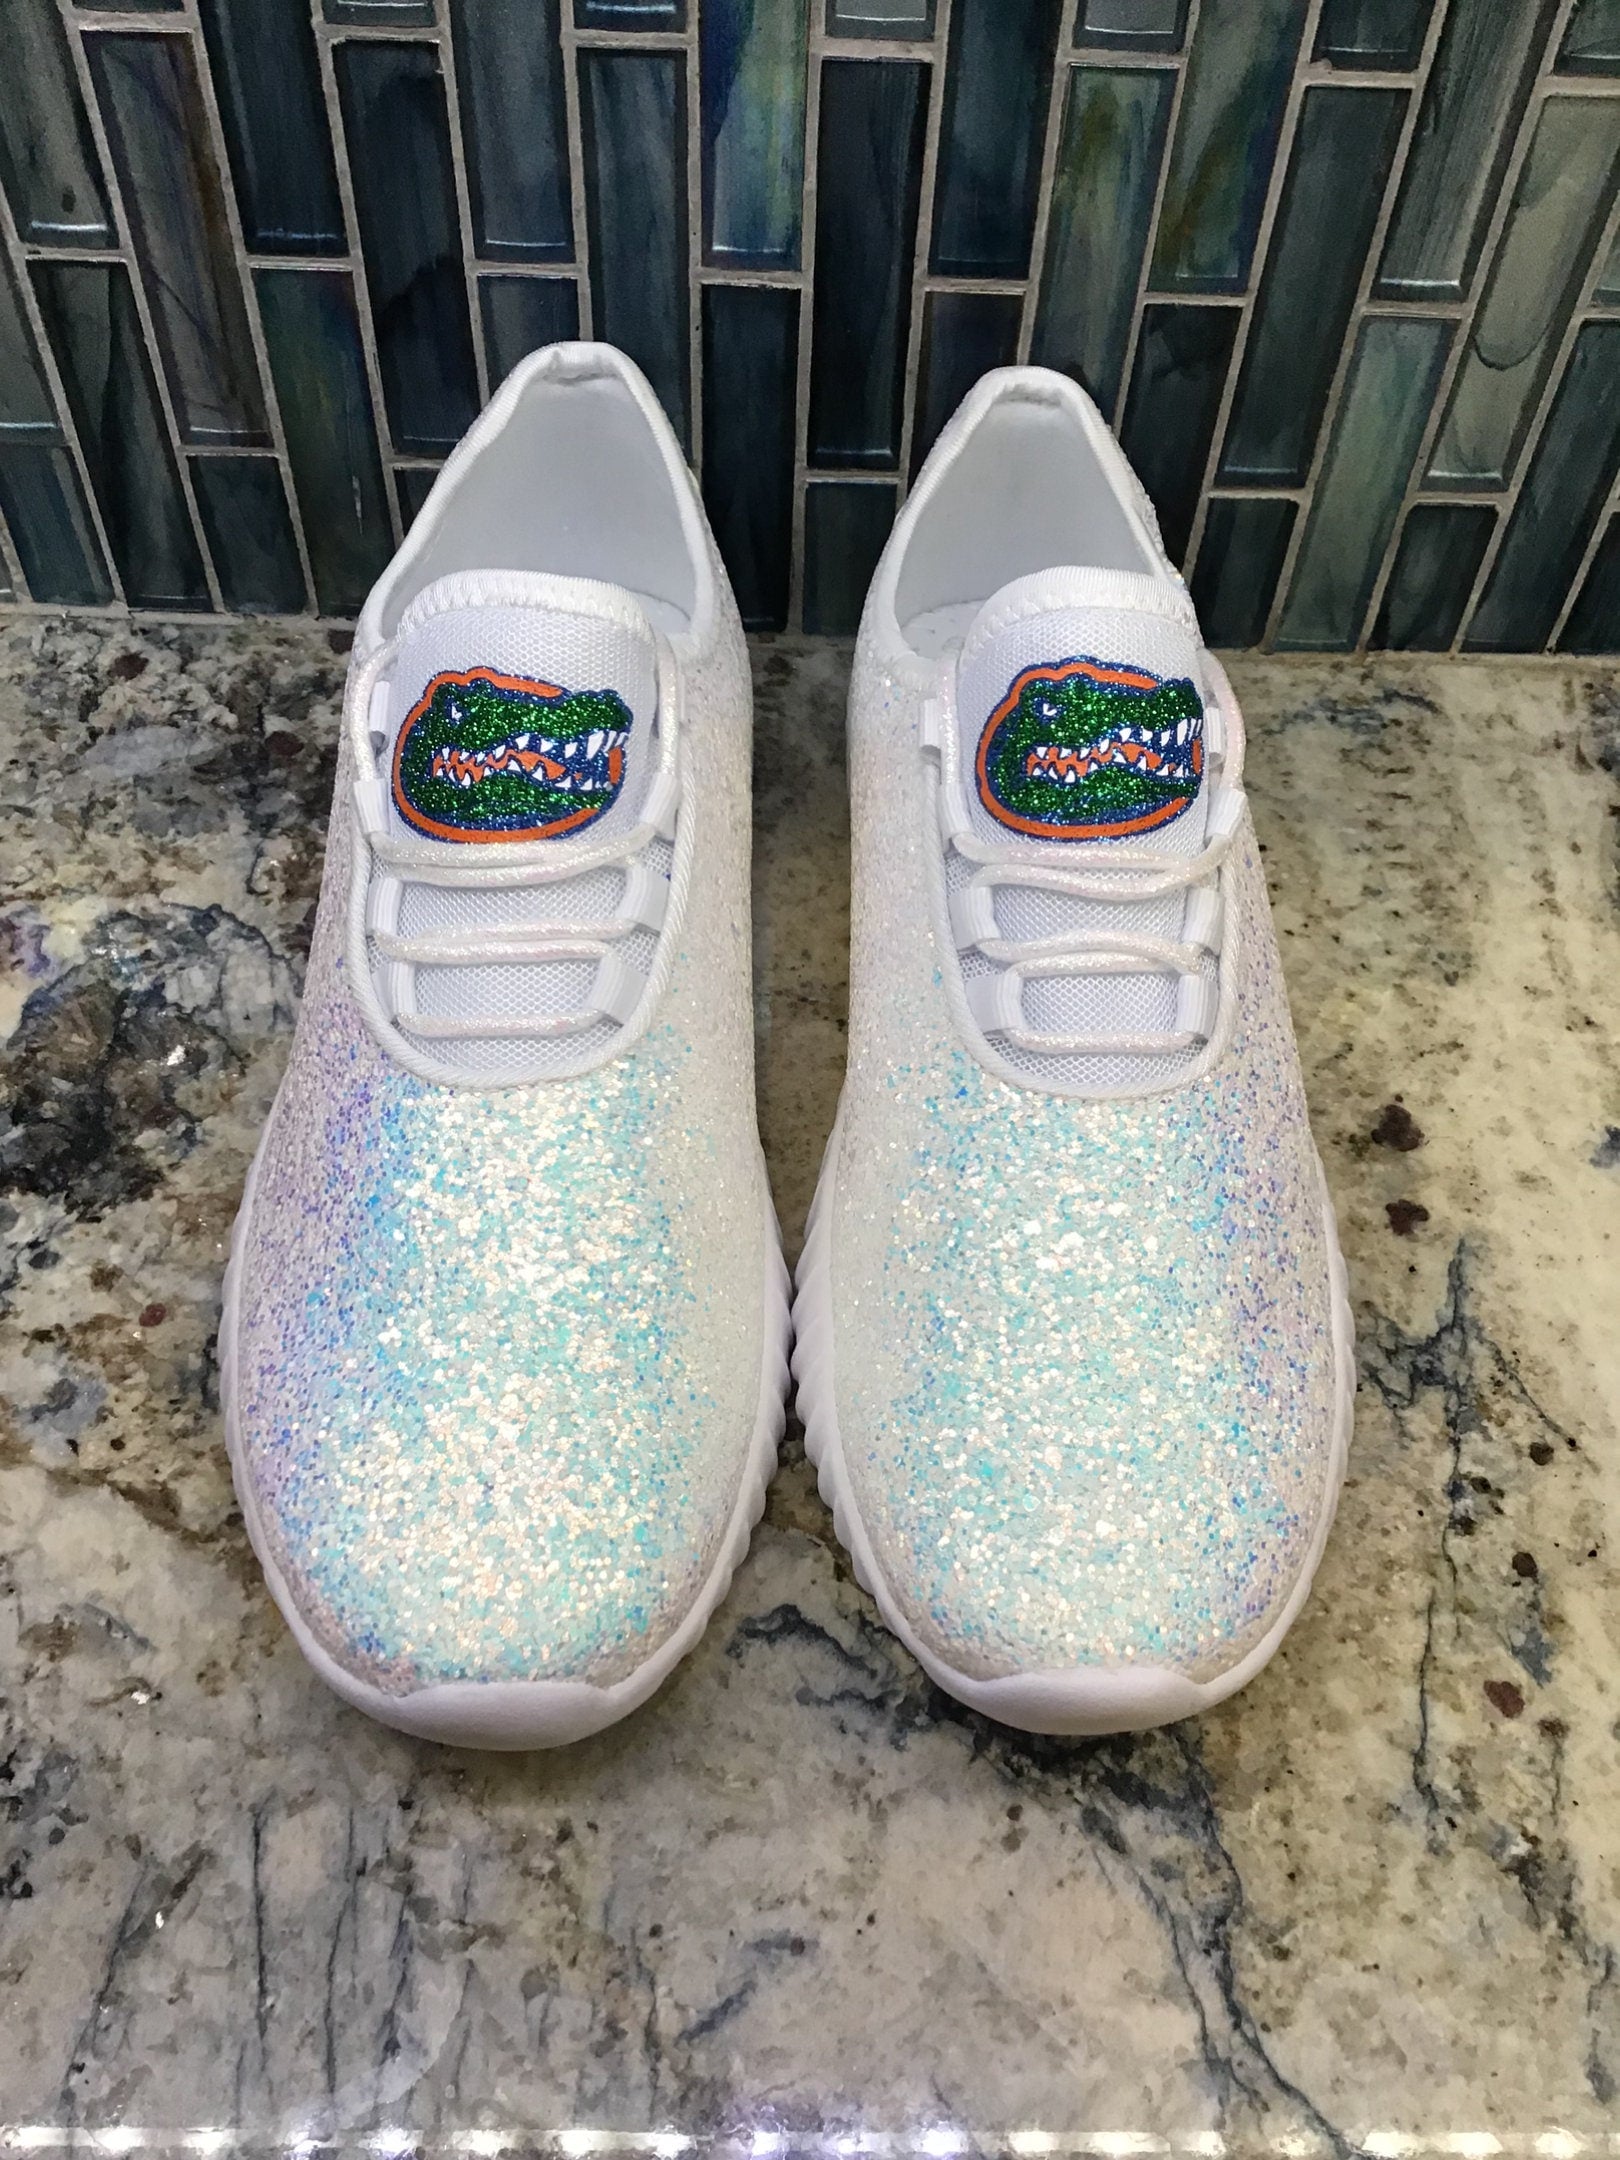 Florida Gator Glitter Sneakers